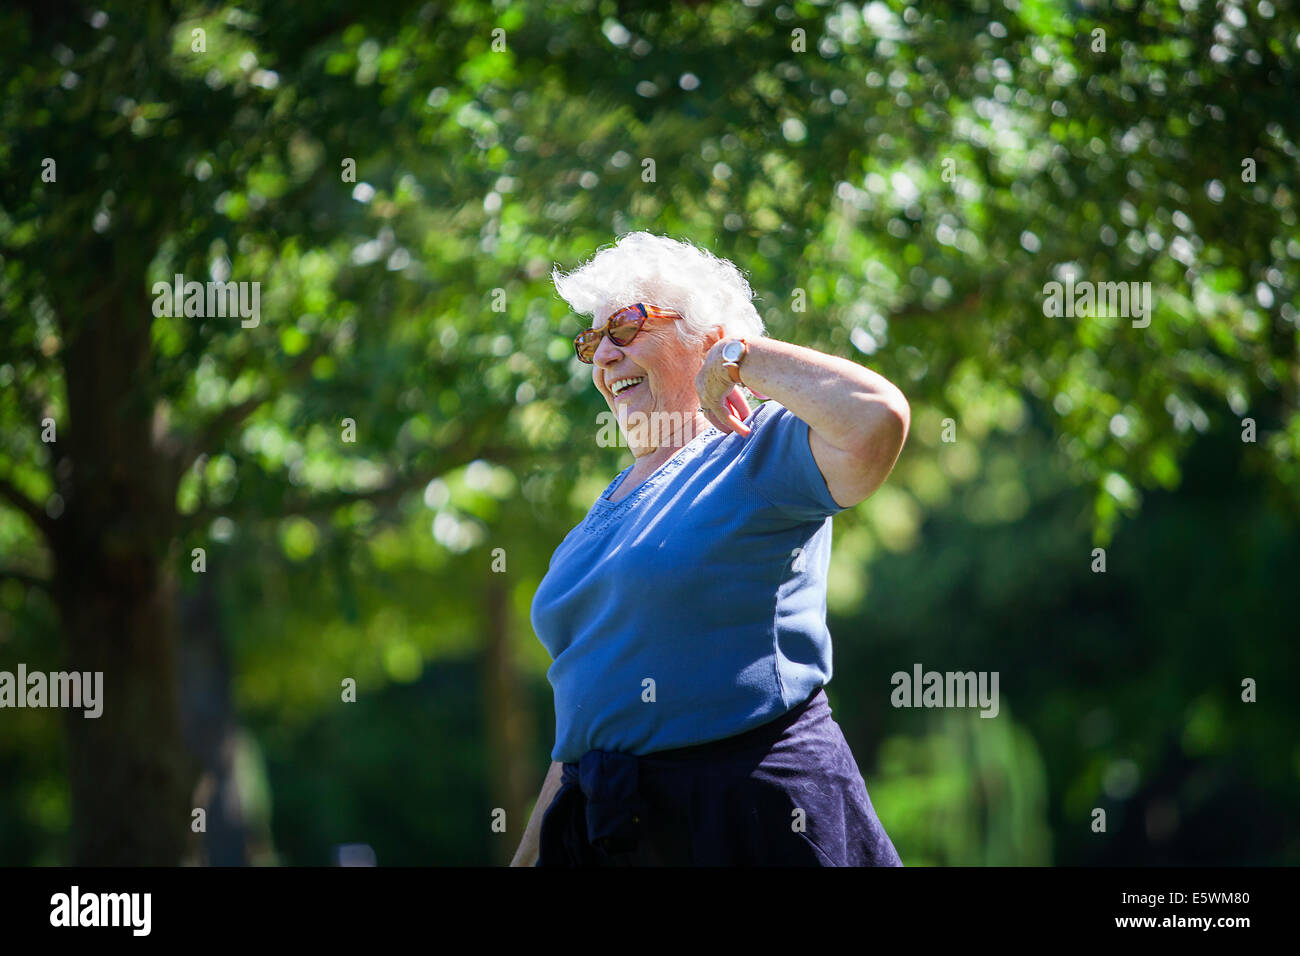 Elderly person practising a sport Stock Photo